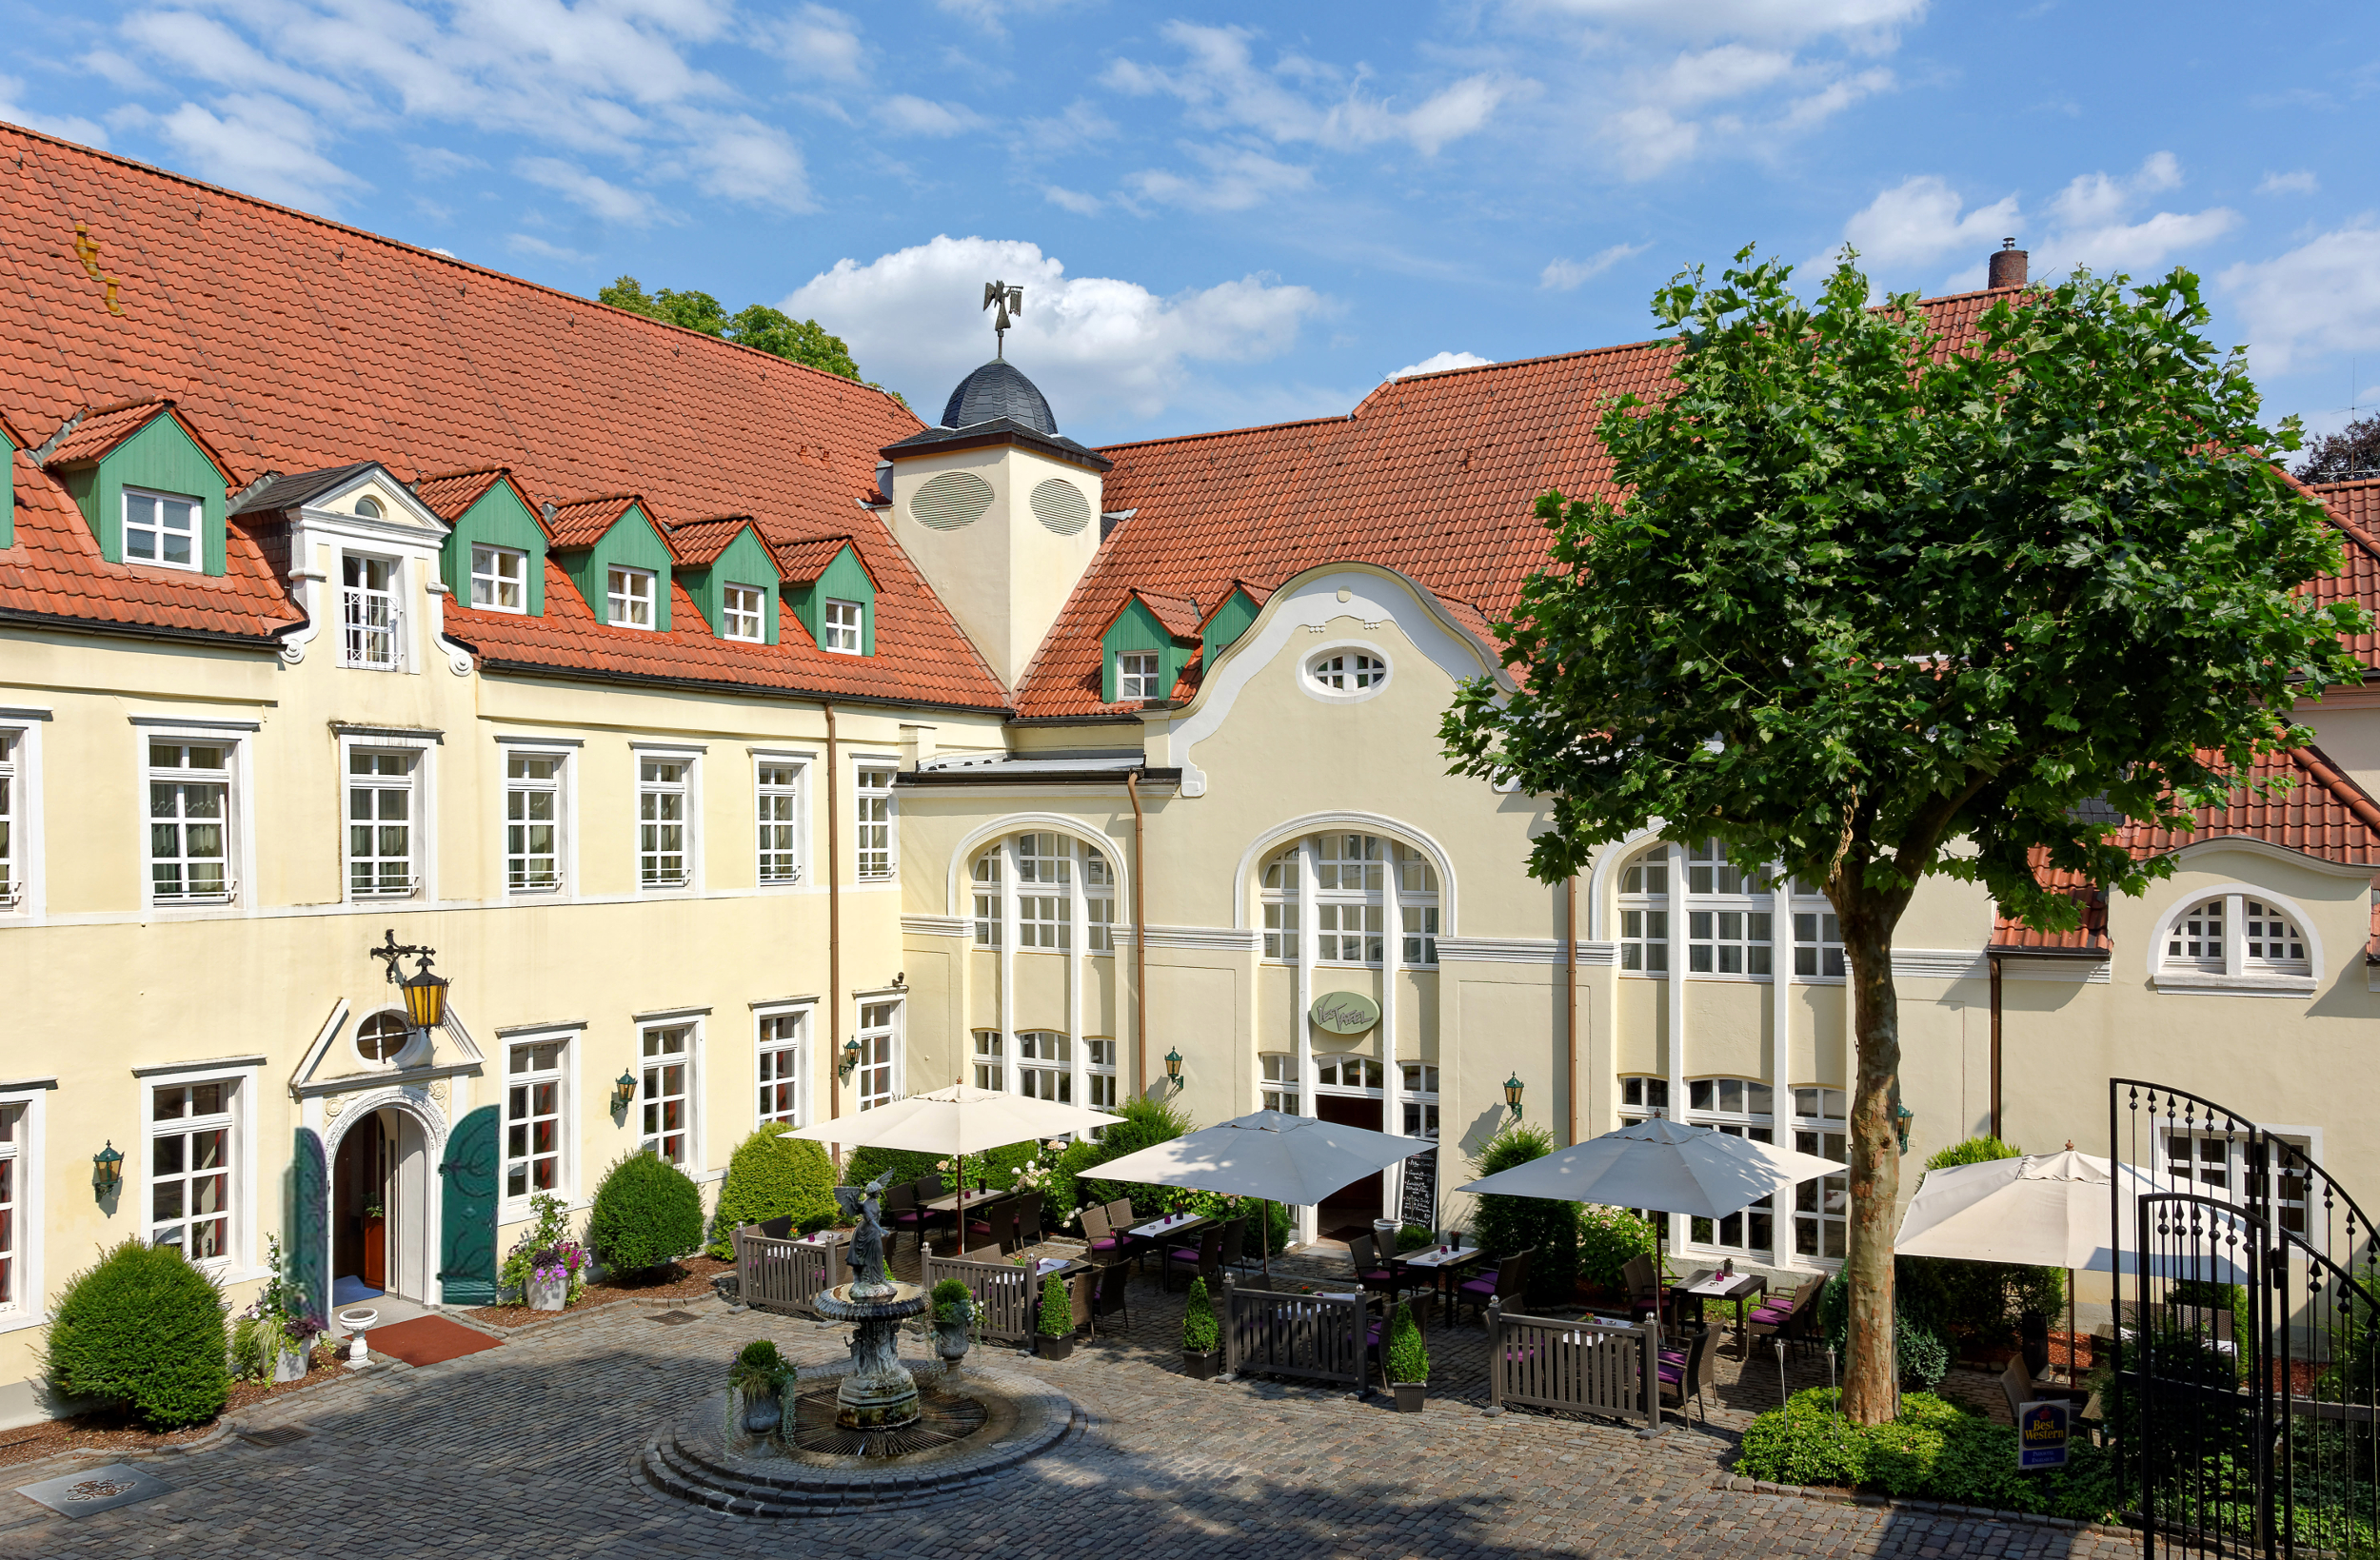 Parkhotel Engelsburg, Recklinghausen.
